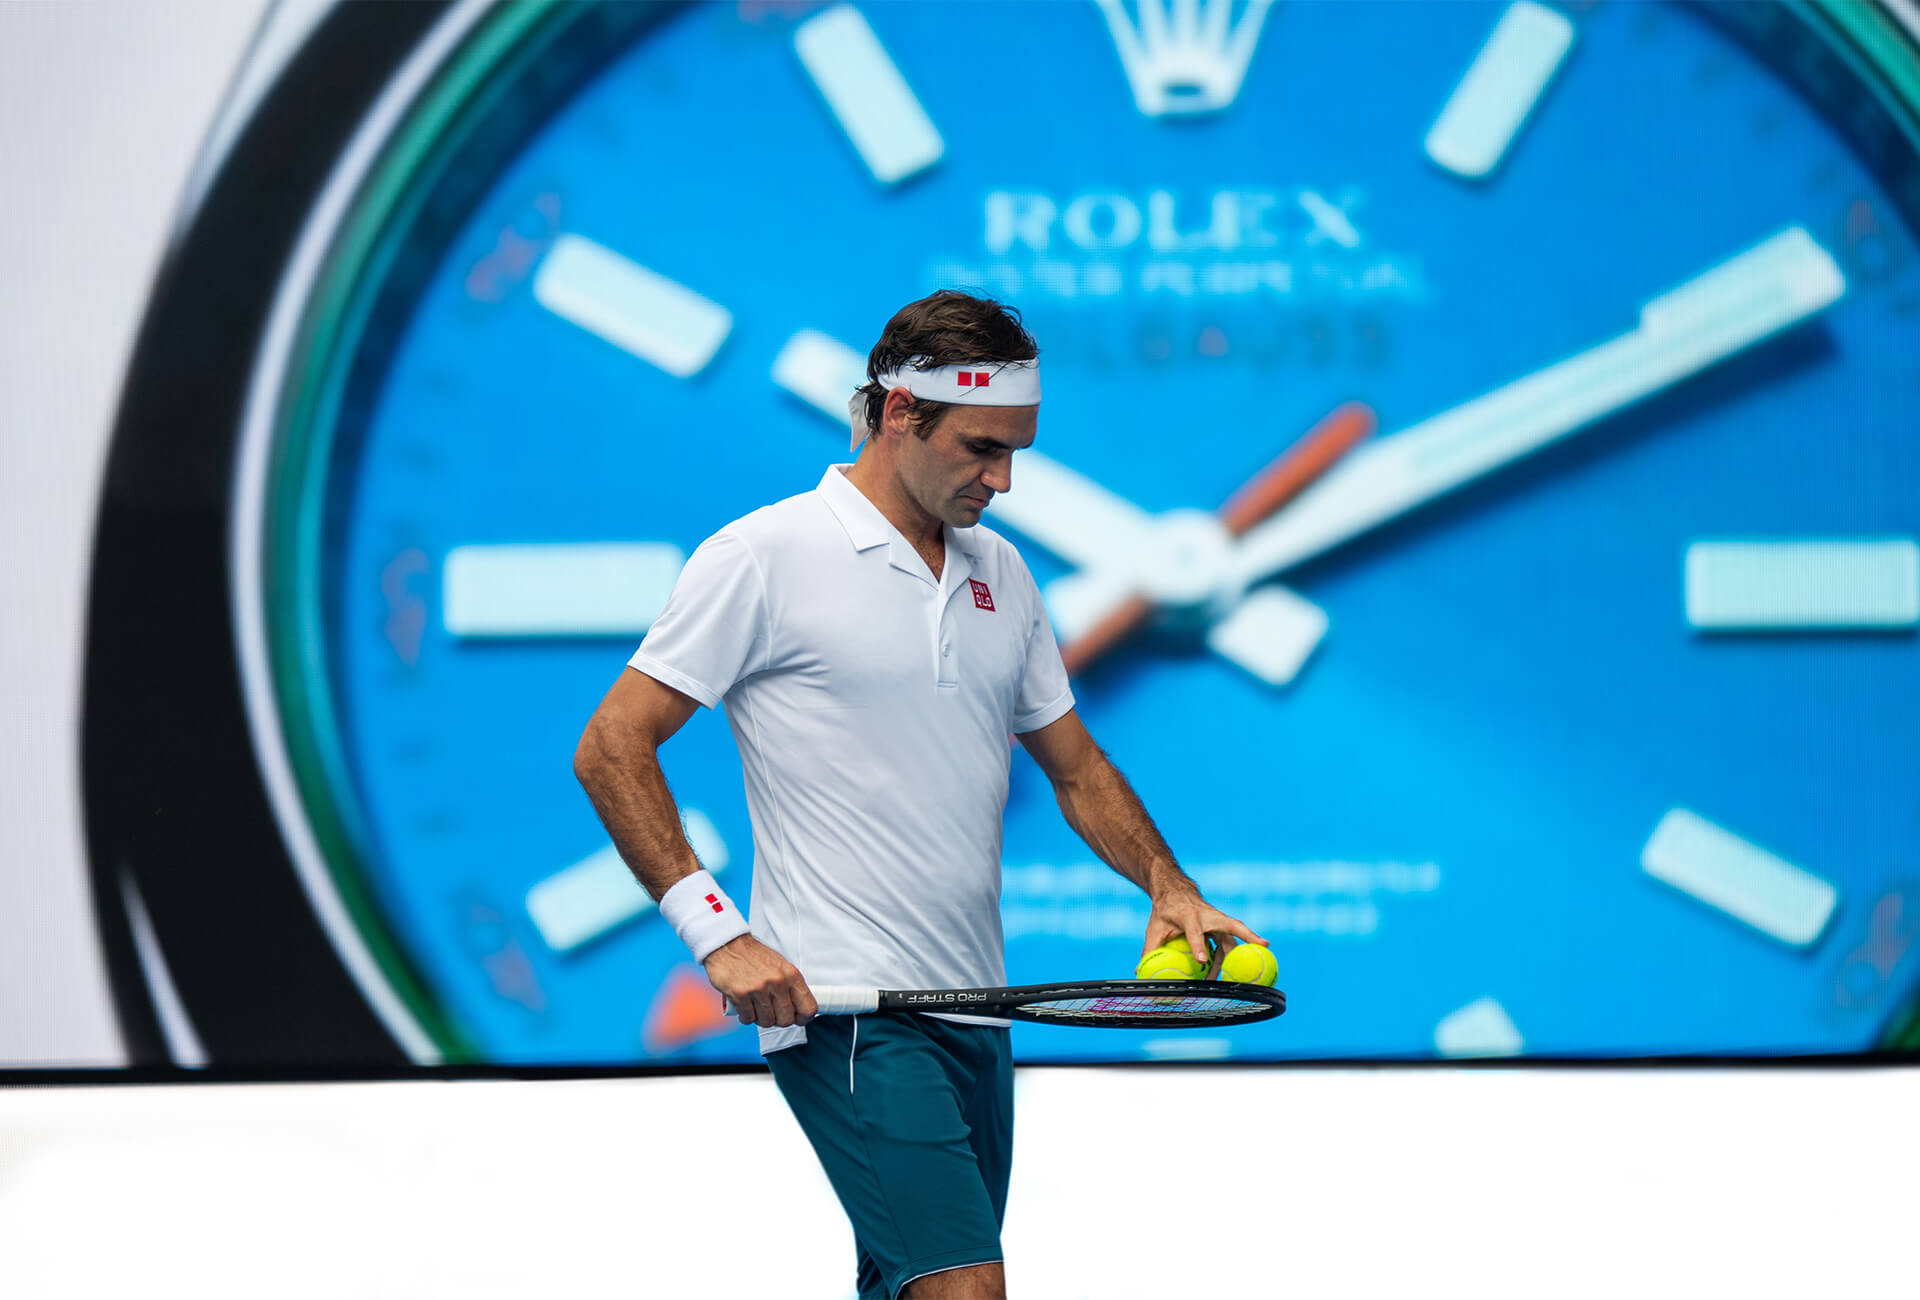 rolex sponsor tennis